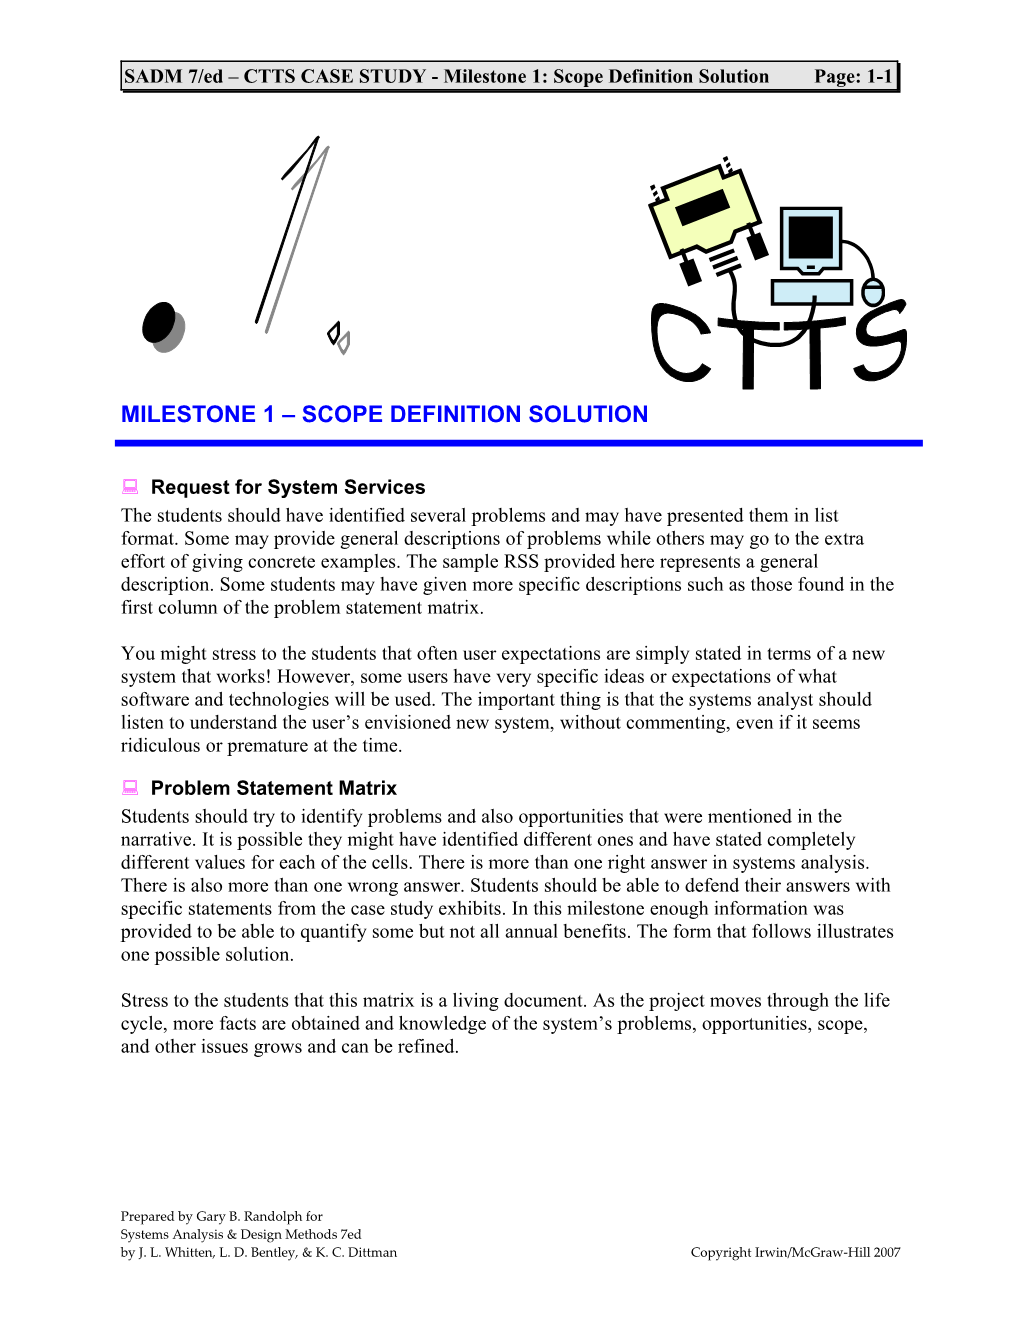 SADM 7/Ed CTTS CASE STUDY - Milestone 1: Scope Definition Solution Page: 1-2